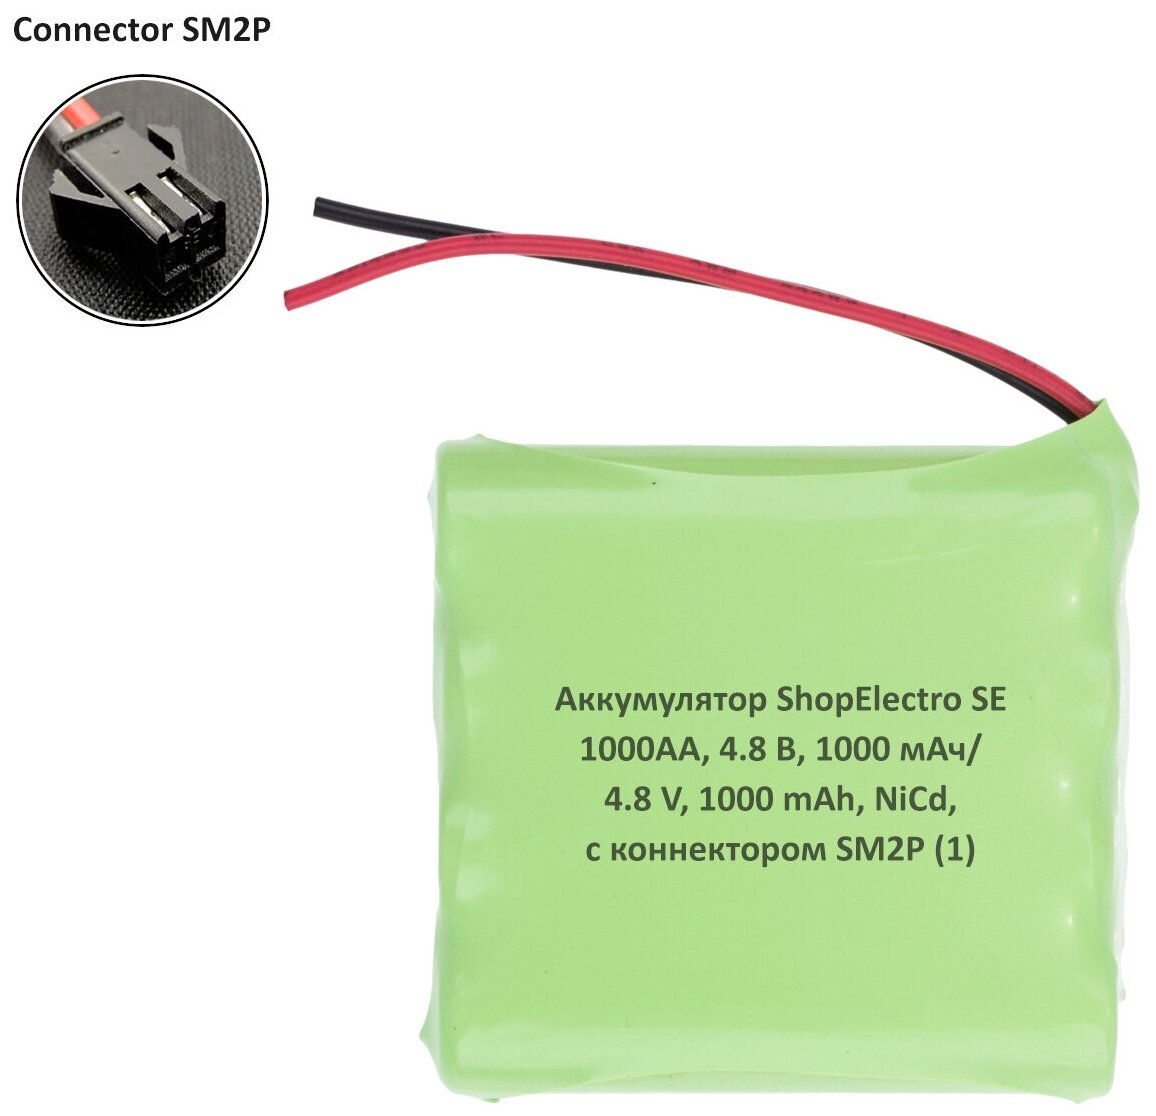 Аккумулятор ShopElectro SE1000АА, 4.8 В, 1000 мАч/ 4.8 V, 1000 mAh, NiCd, с коннектором SM2P (1)